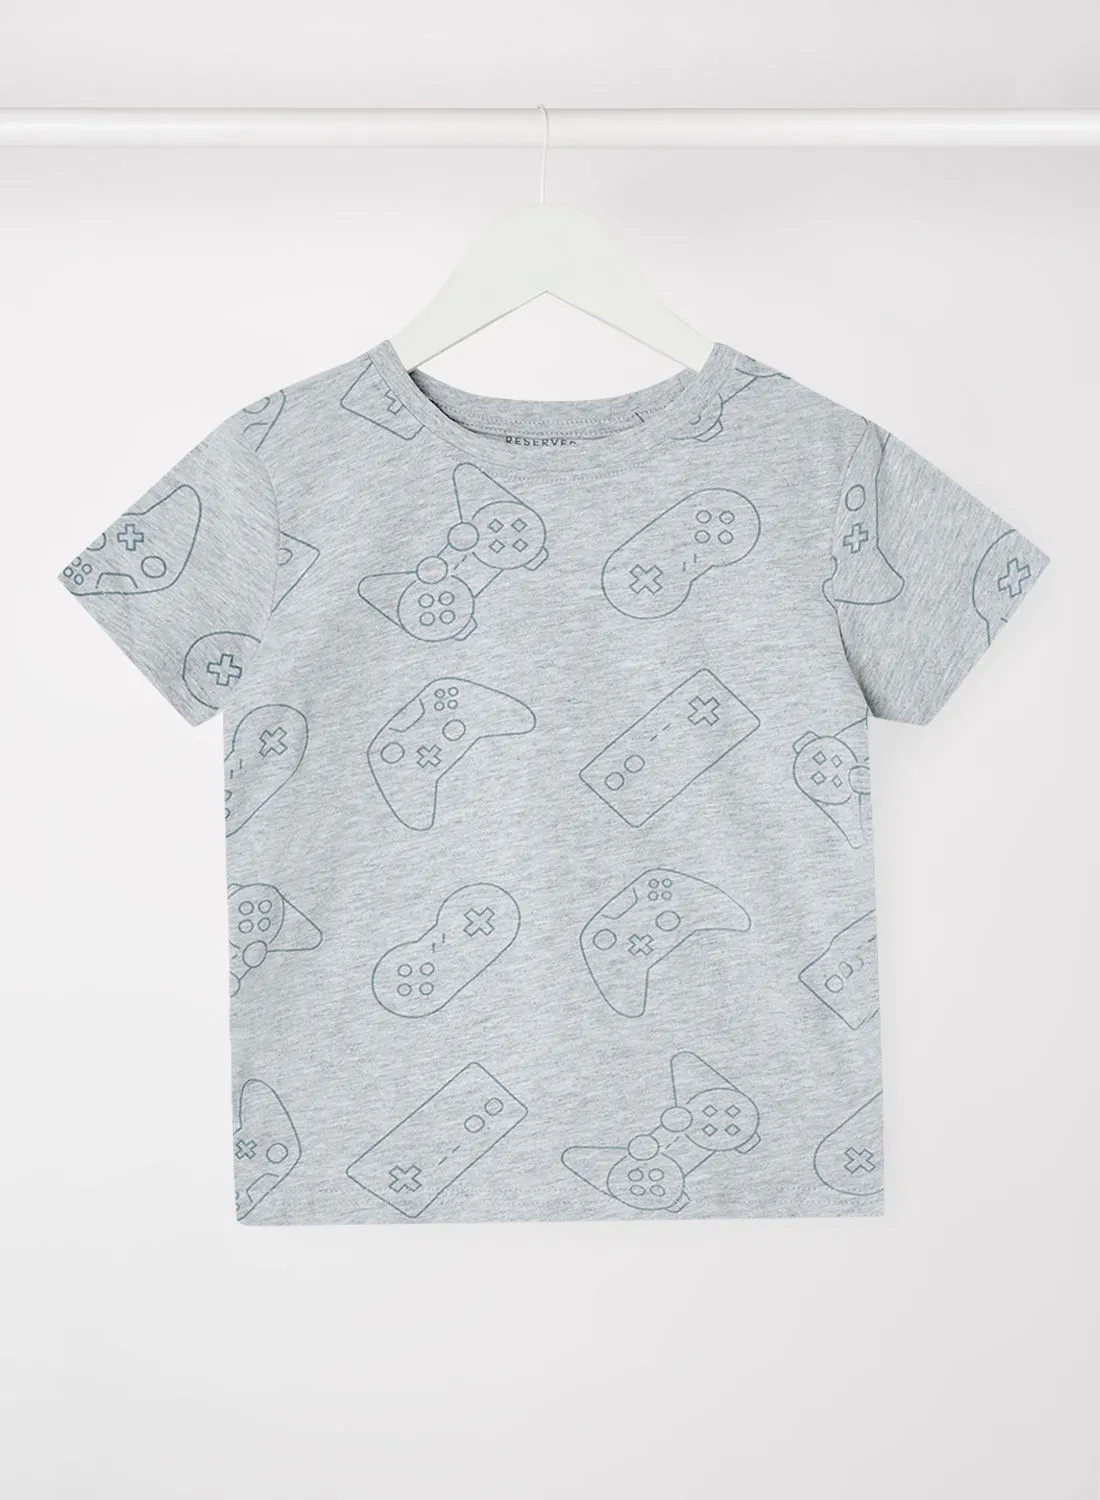 محجوز Kids / Teen Game Controller T-Shirt Light Grey